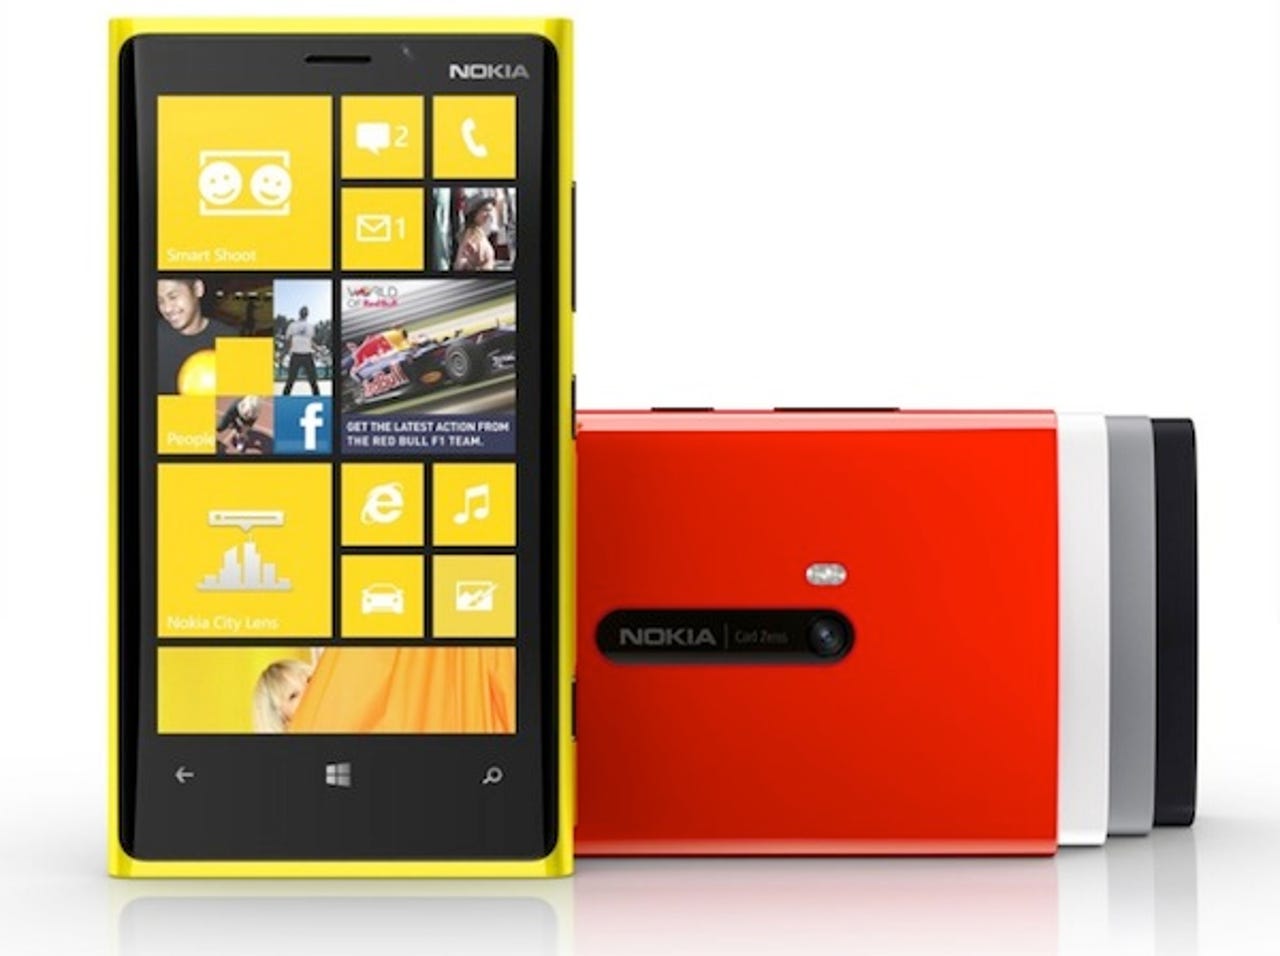 Seven reasons to buy the Nokia Lumia 920